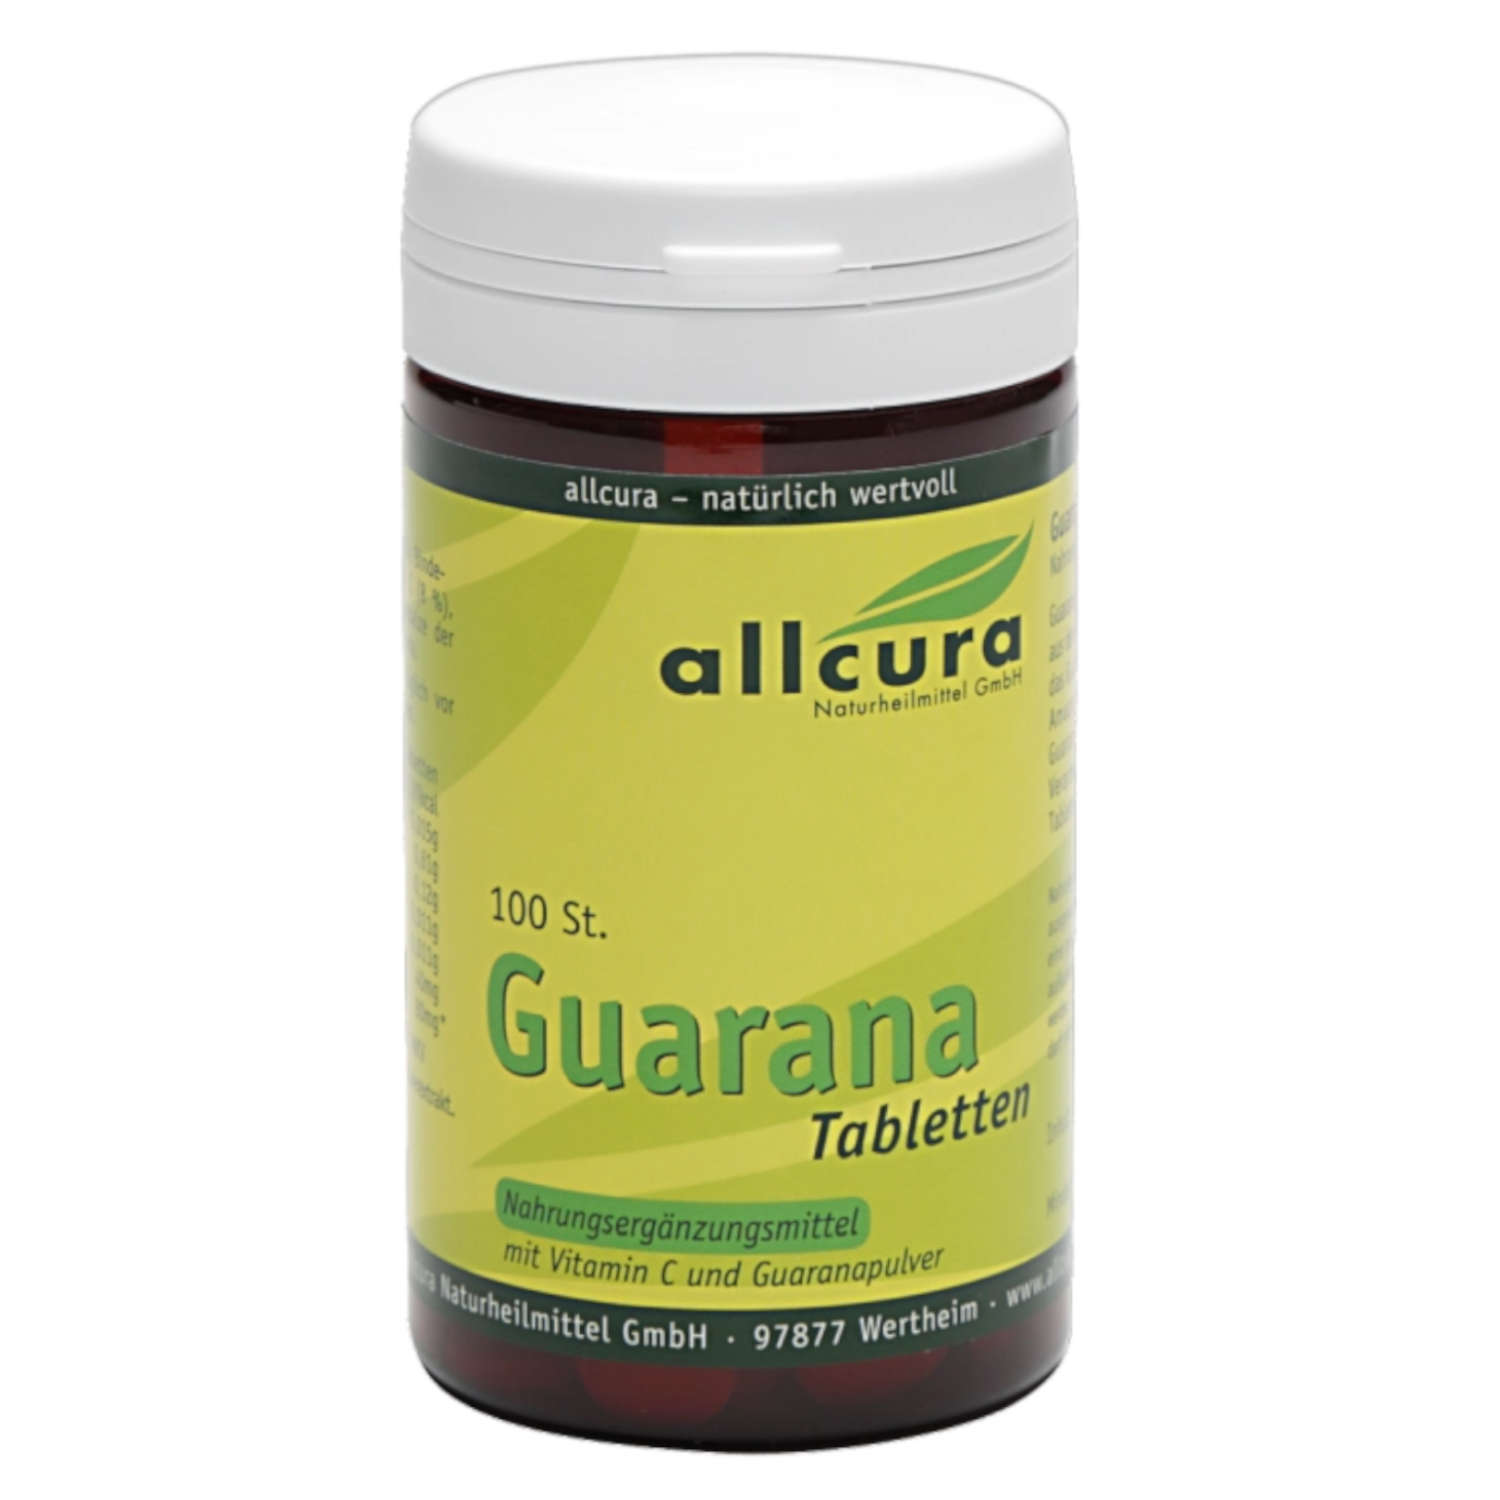 Guarana Tabletten von Allcura - 100 Tabletten